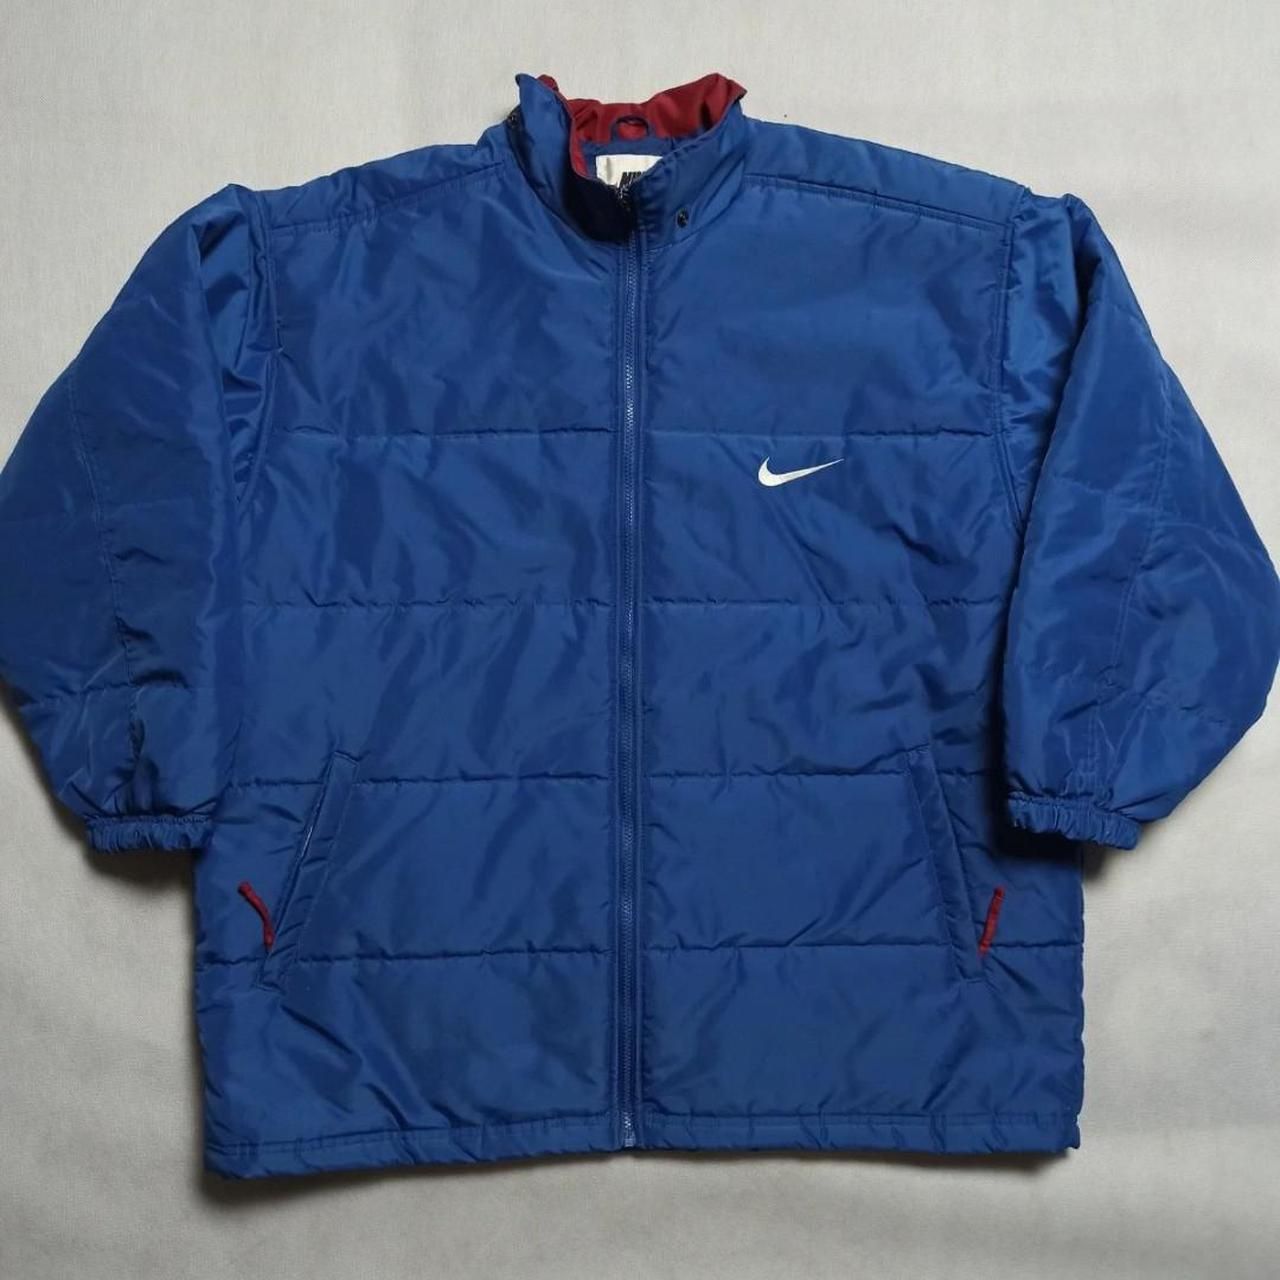 Nike vintage spellout jacket 90s kurtka lekka bomberka wiosenna